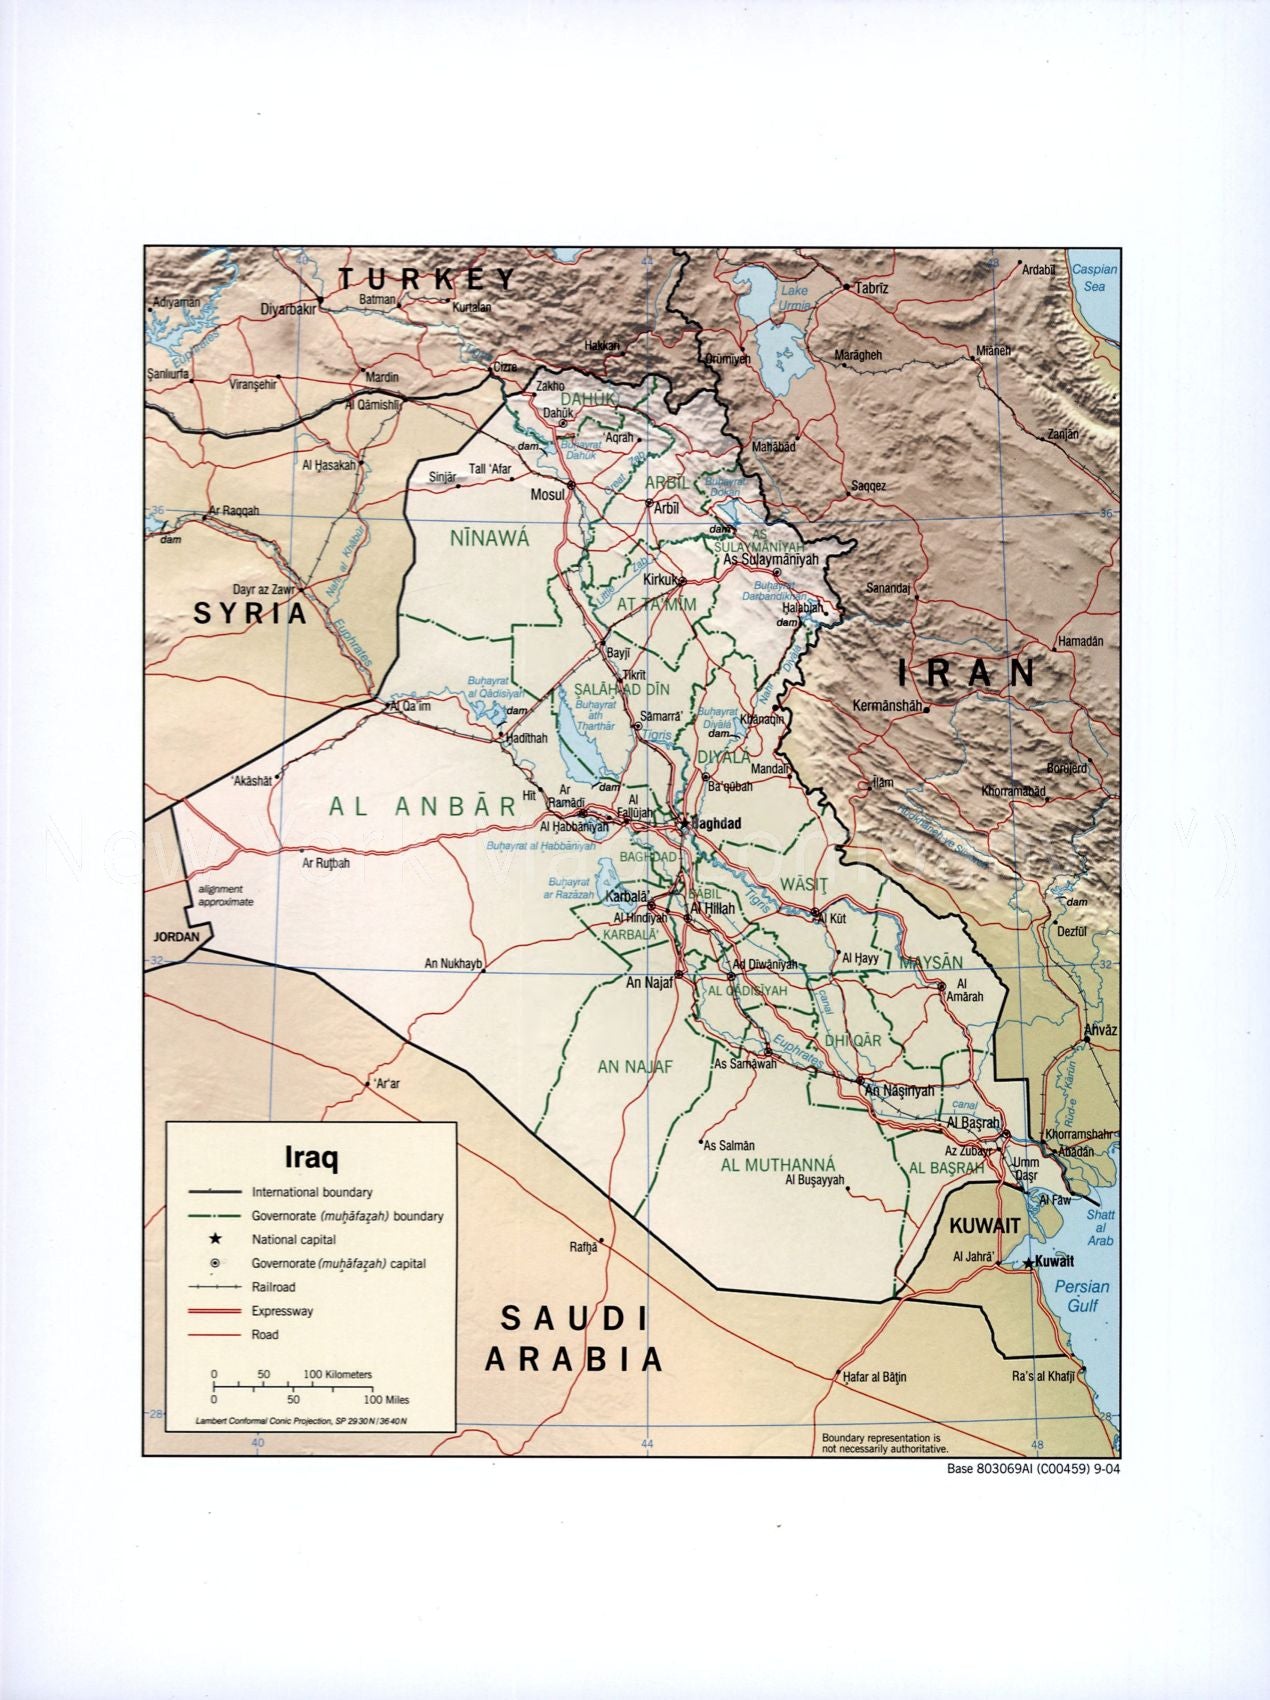 2004 map Iraq. Map Subjects: Iraq